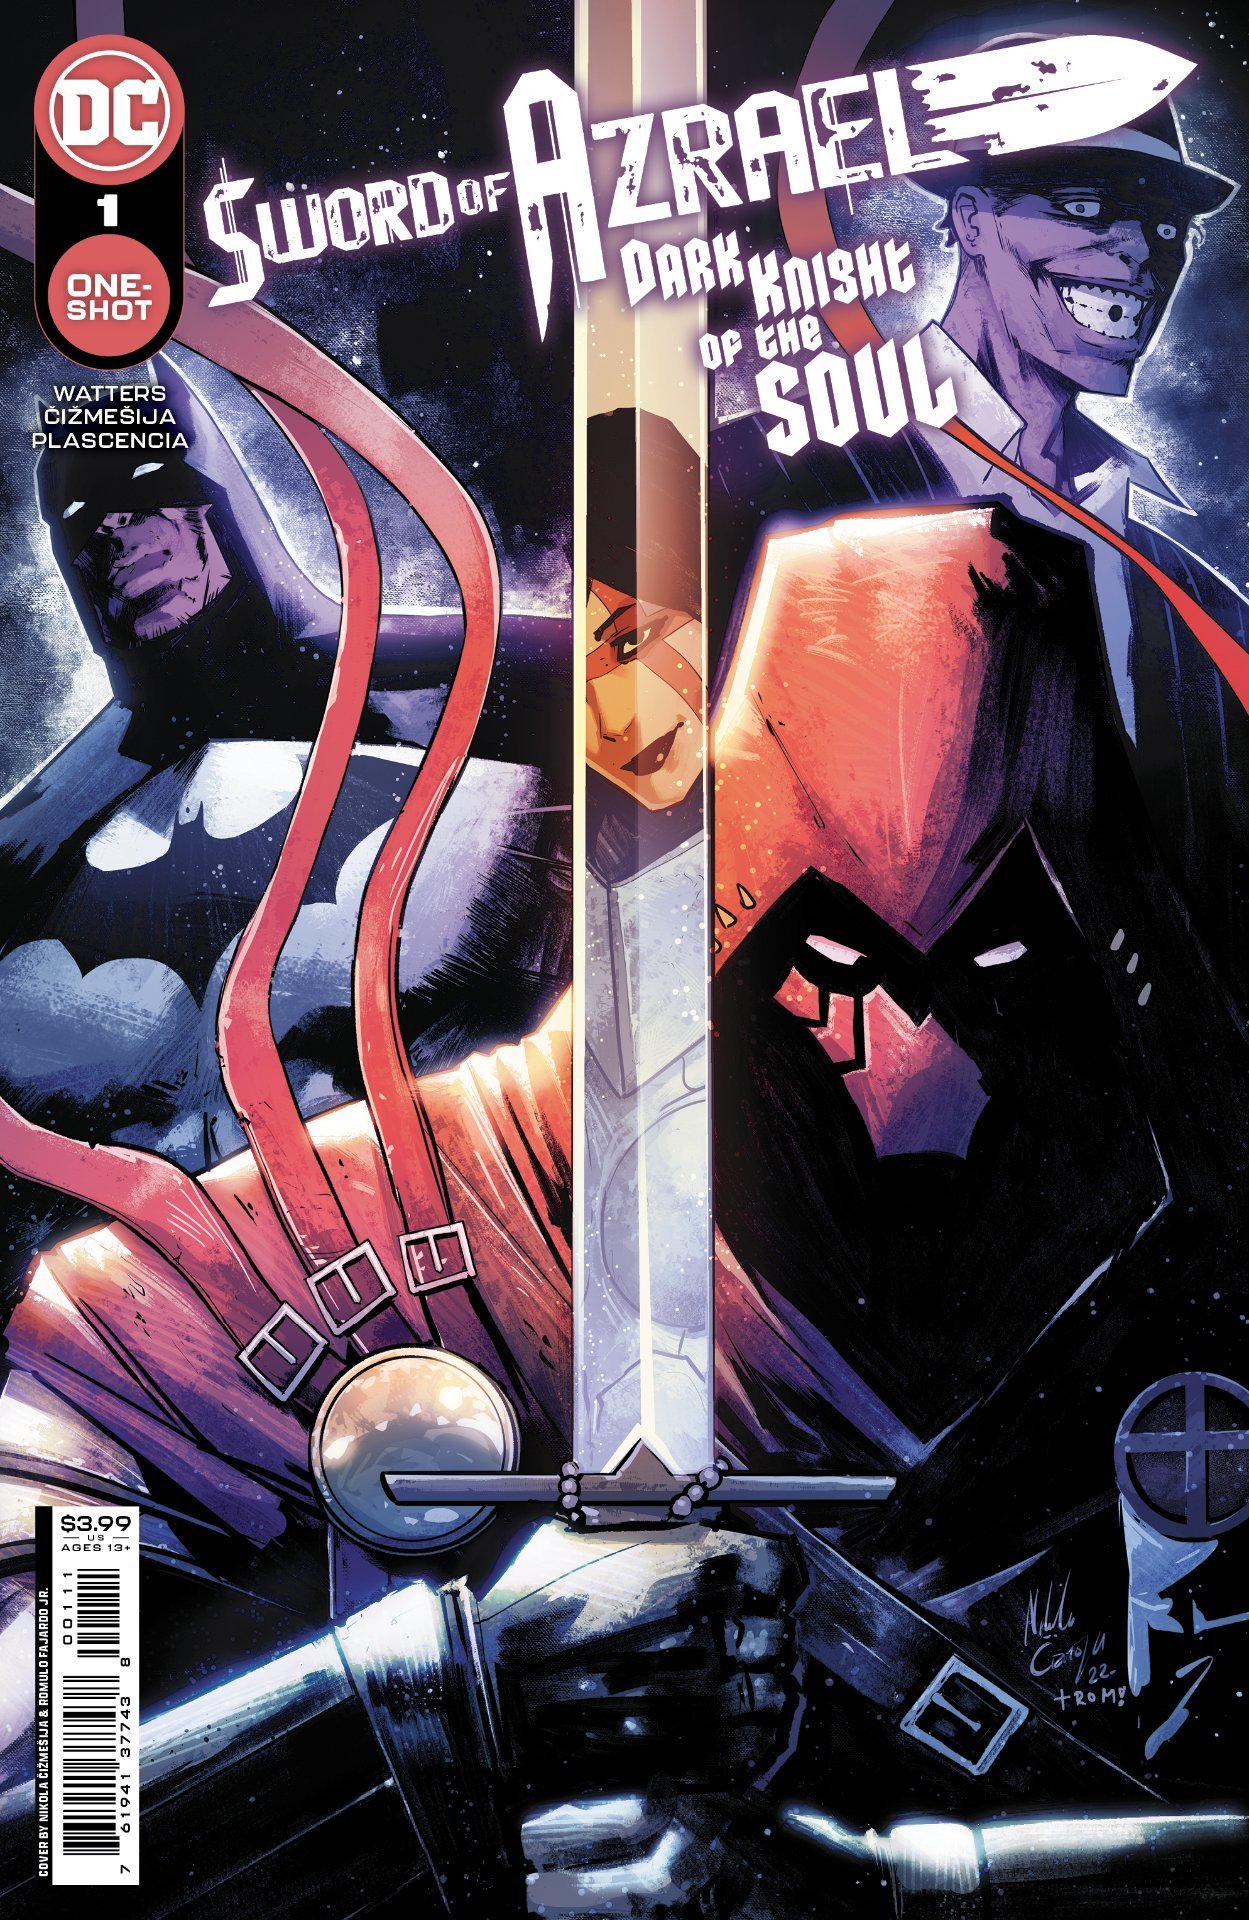 SWORD OF AZRAEL miniseries due in August from Batman: Urban Legends team —  Comics Bookcase